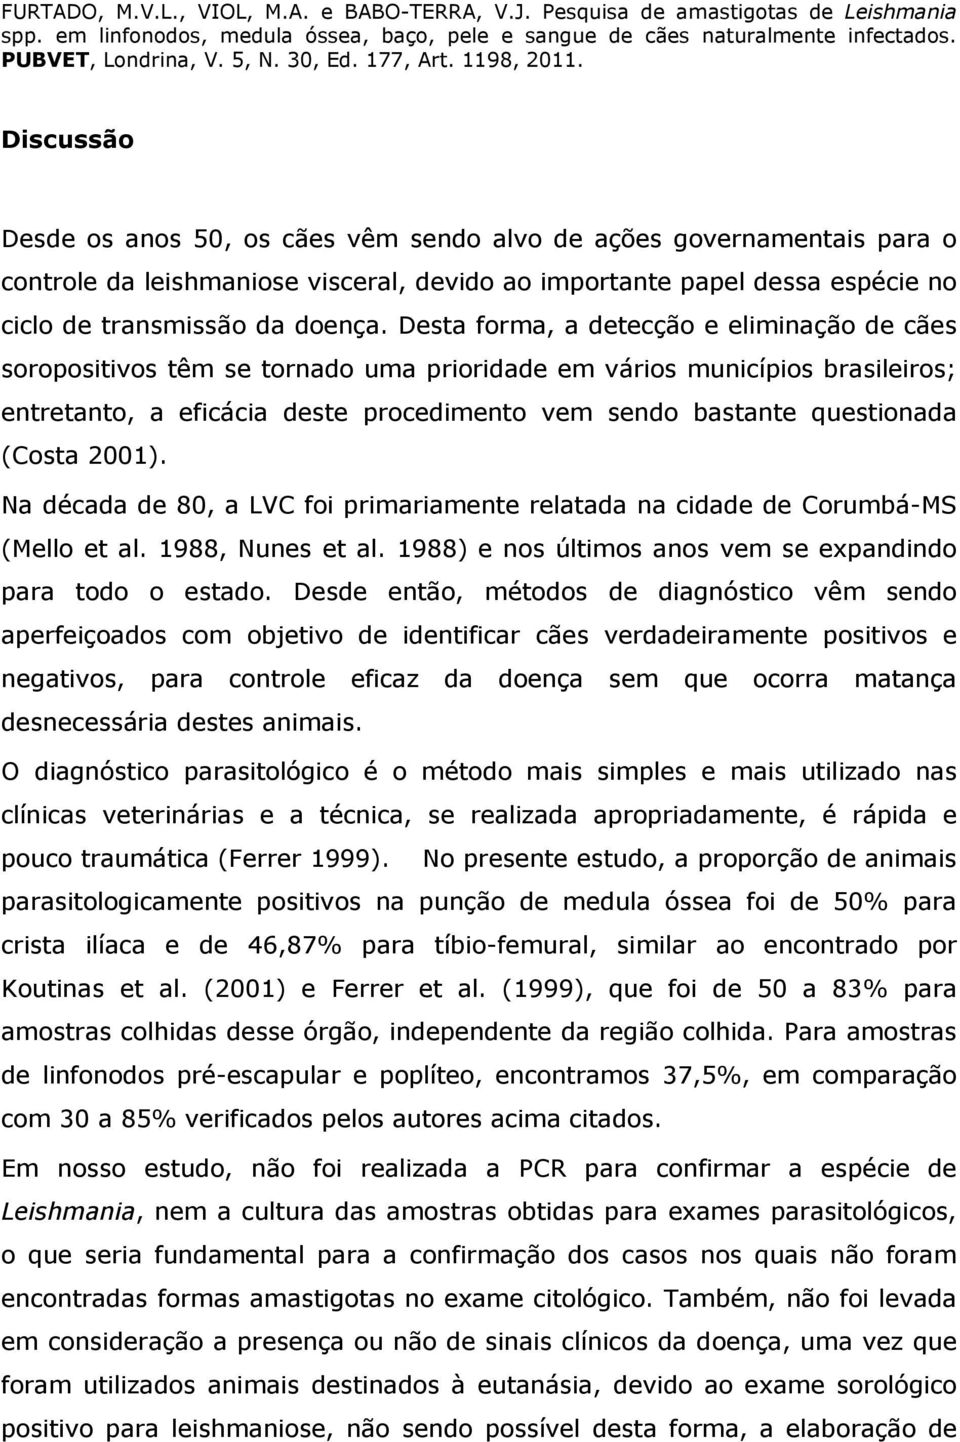 (Costa 2001). Na década de 80, a LVC foi primariamente relatada na cidade de Corumbá-MS (Mello et al. 1988, Nunes et al. 1988) e nos últimos anos vem se expandindo para todo o estado.